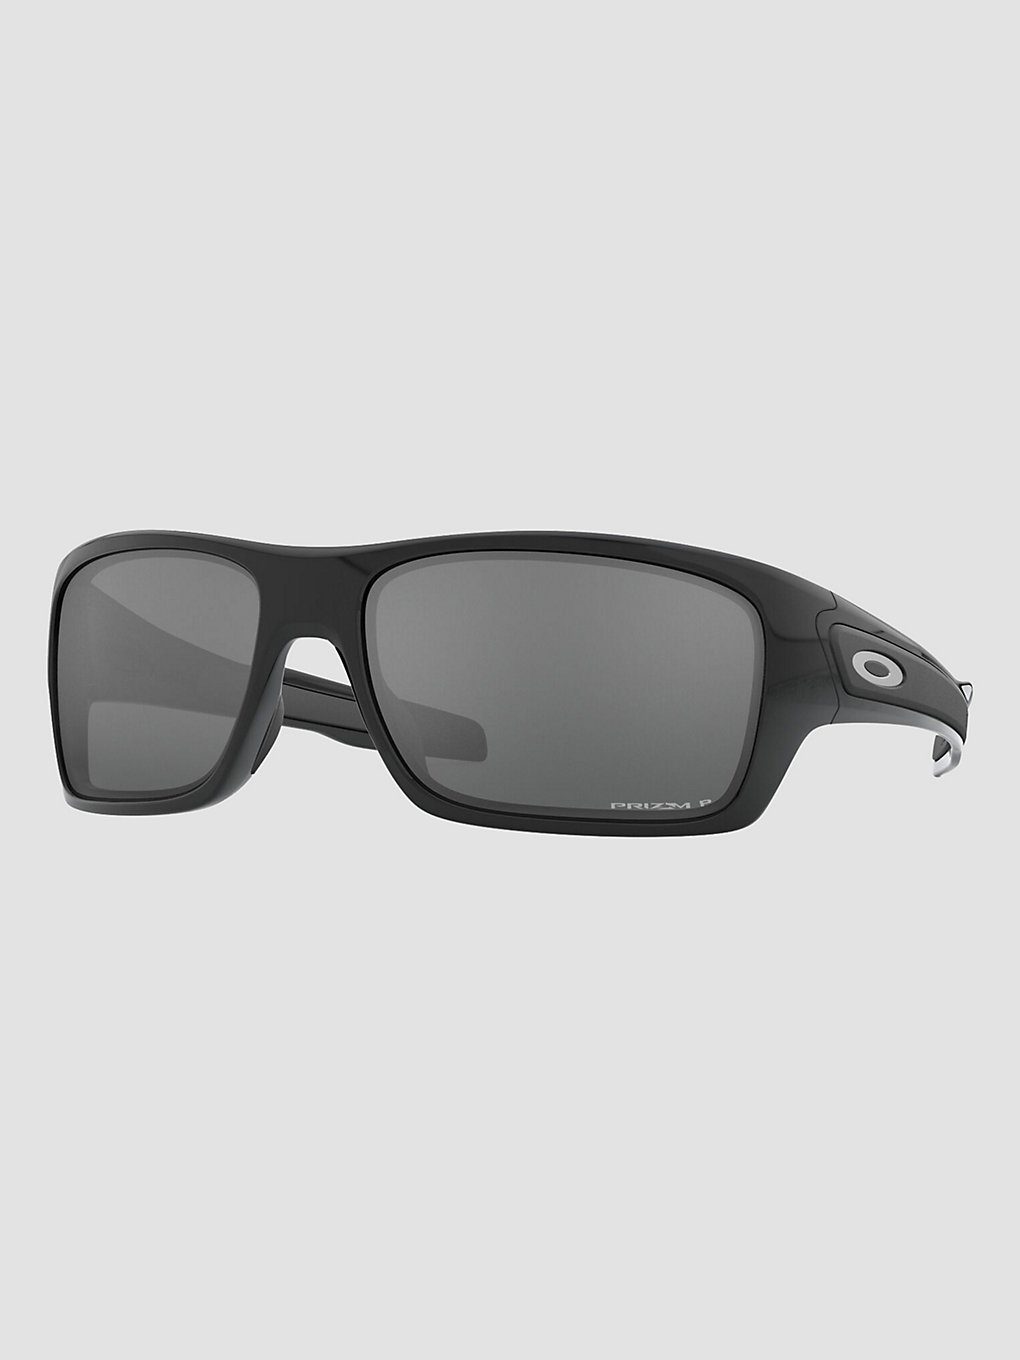 Oakley Turbine Polished Black Sunglasses prizm black polarized